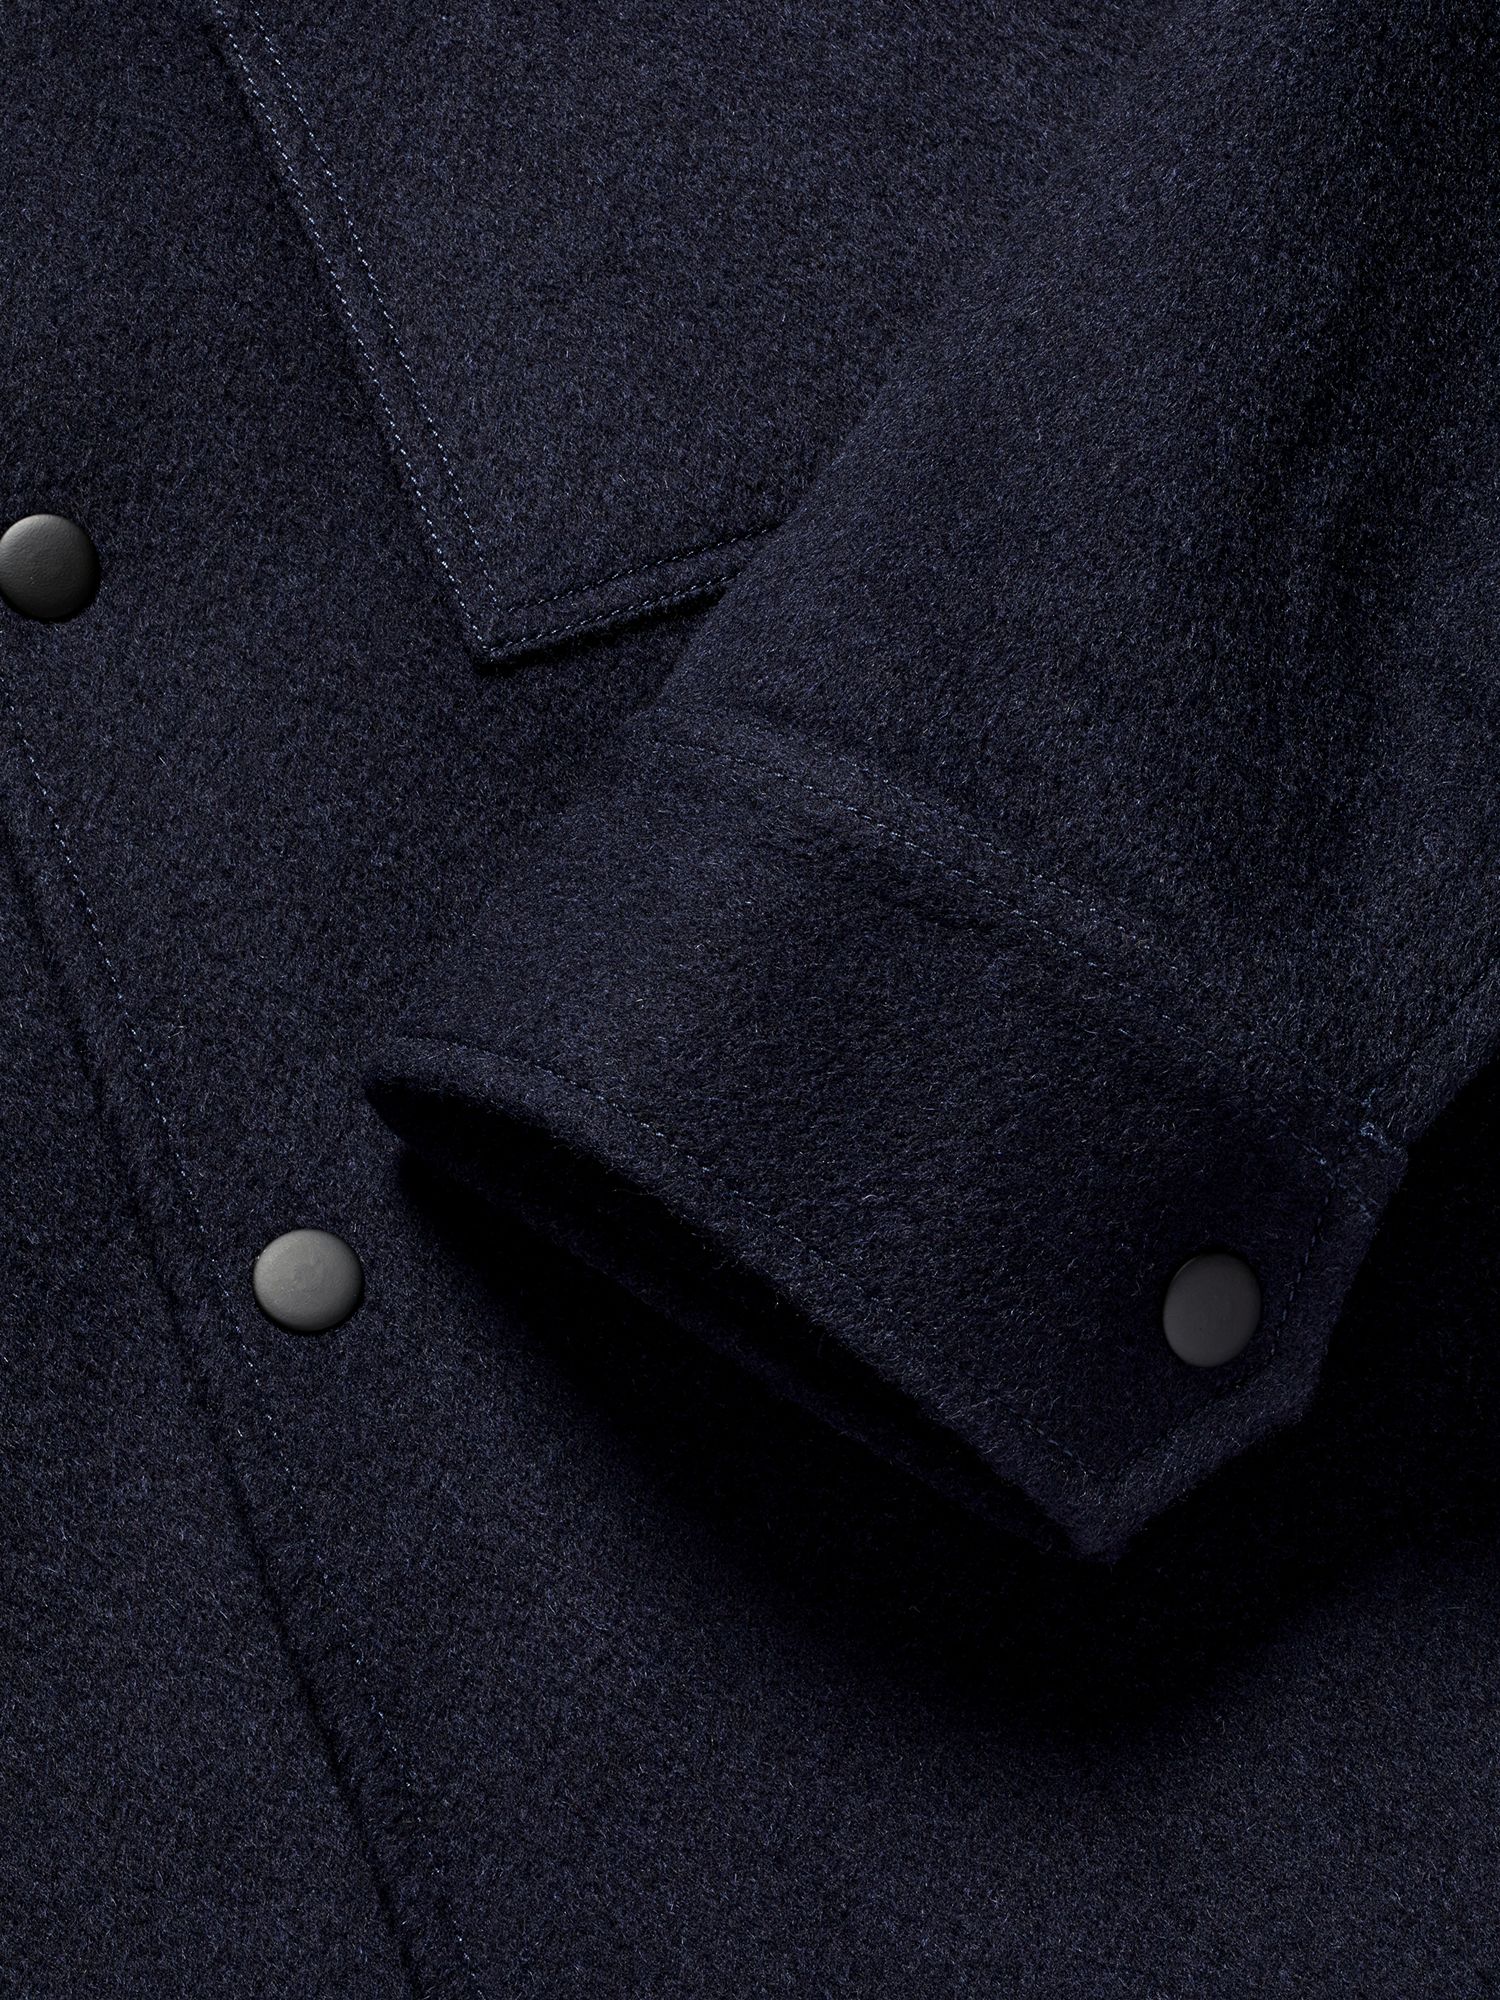 Charles Tyrwhitt Pure Wool Harrington Jacket, Navy at John Lewis & Partners